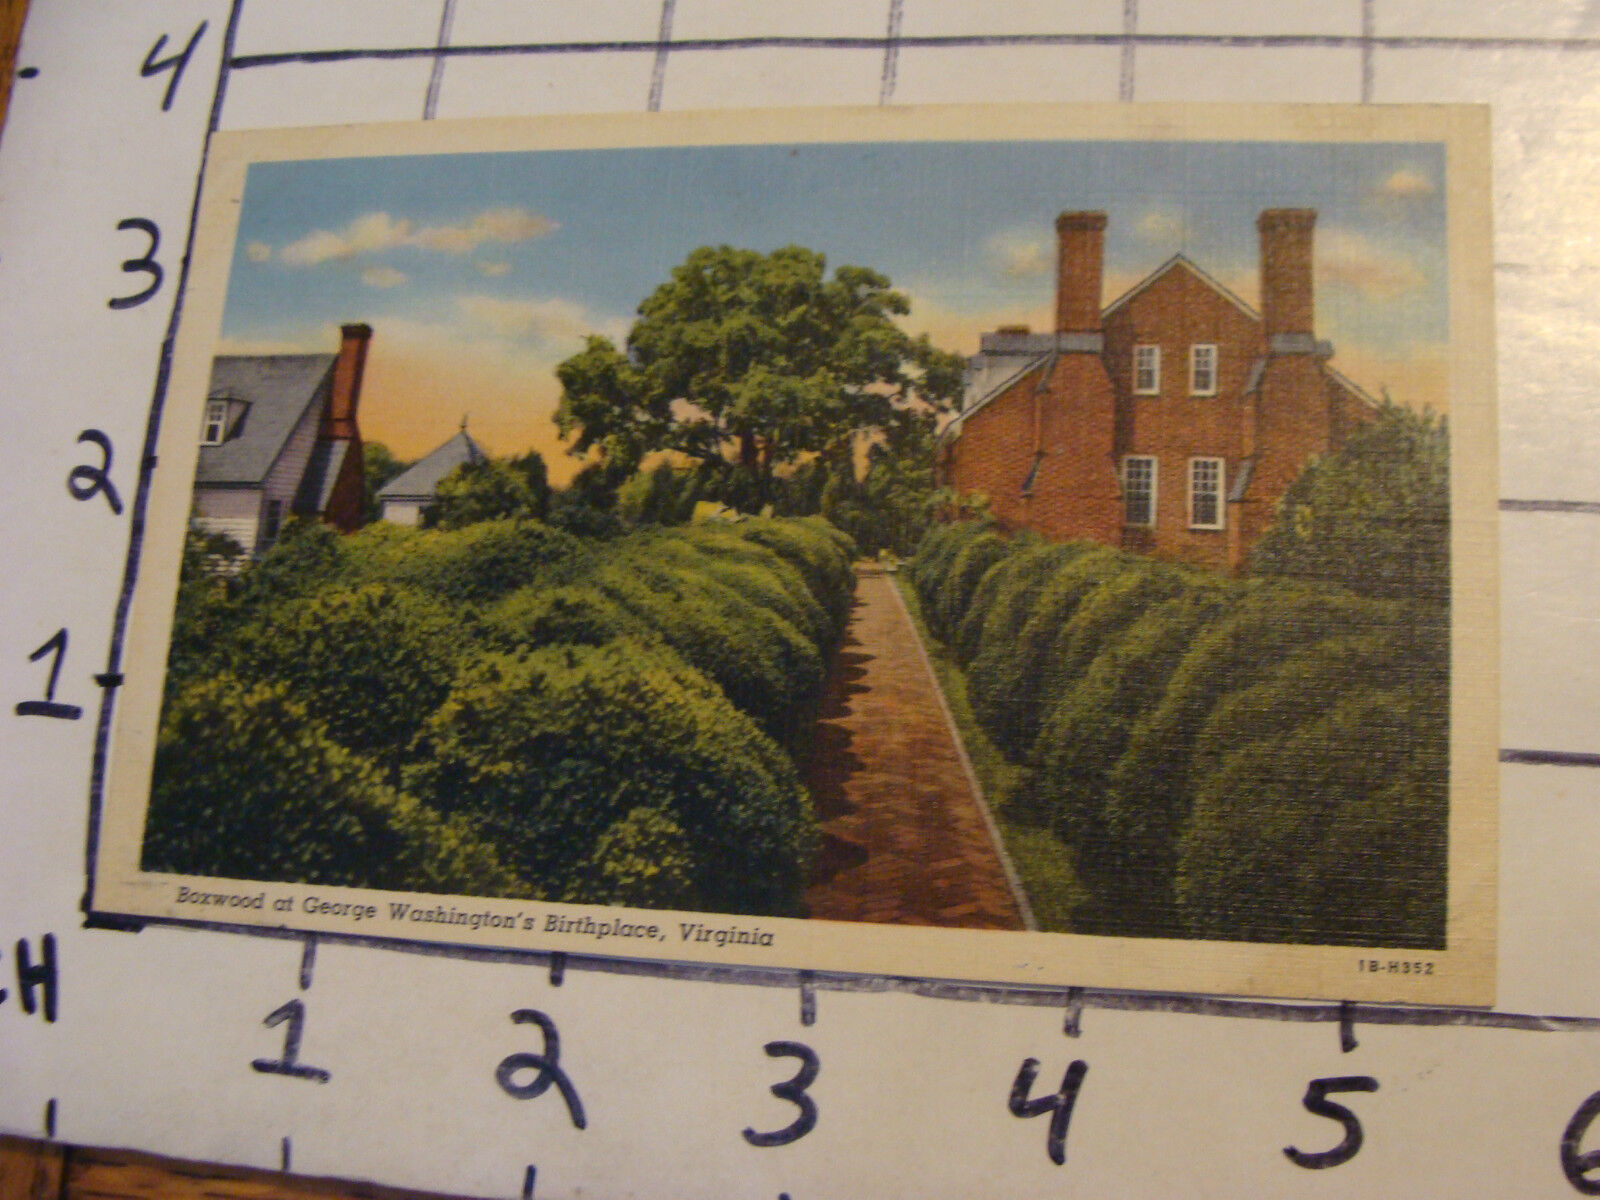  Unused Postcard: BOXWOOD at GEORGE WASHINGTON\'S BIRTHPLACE